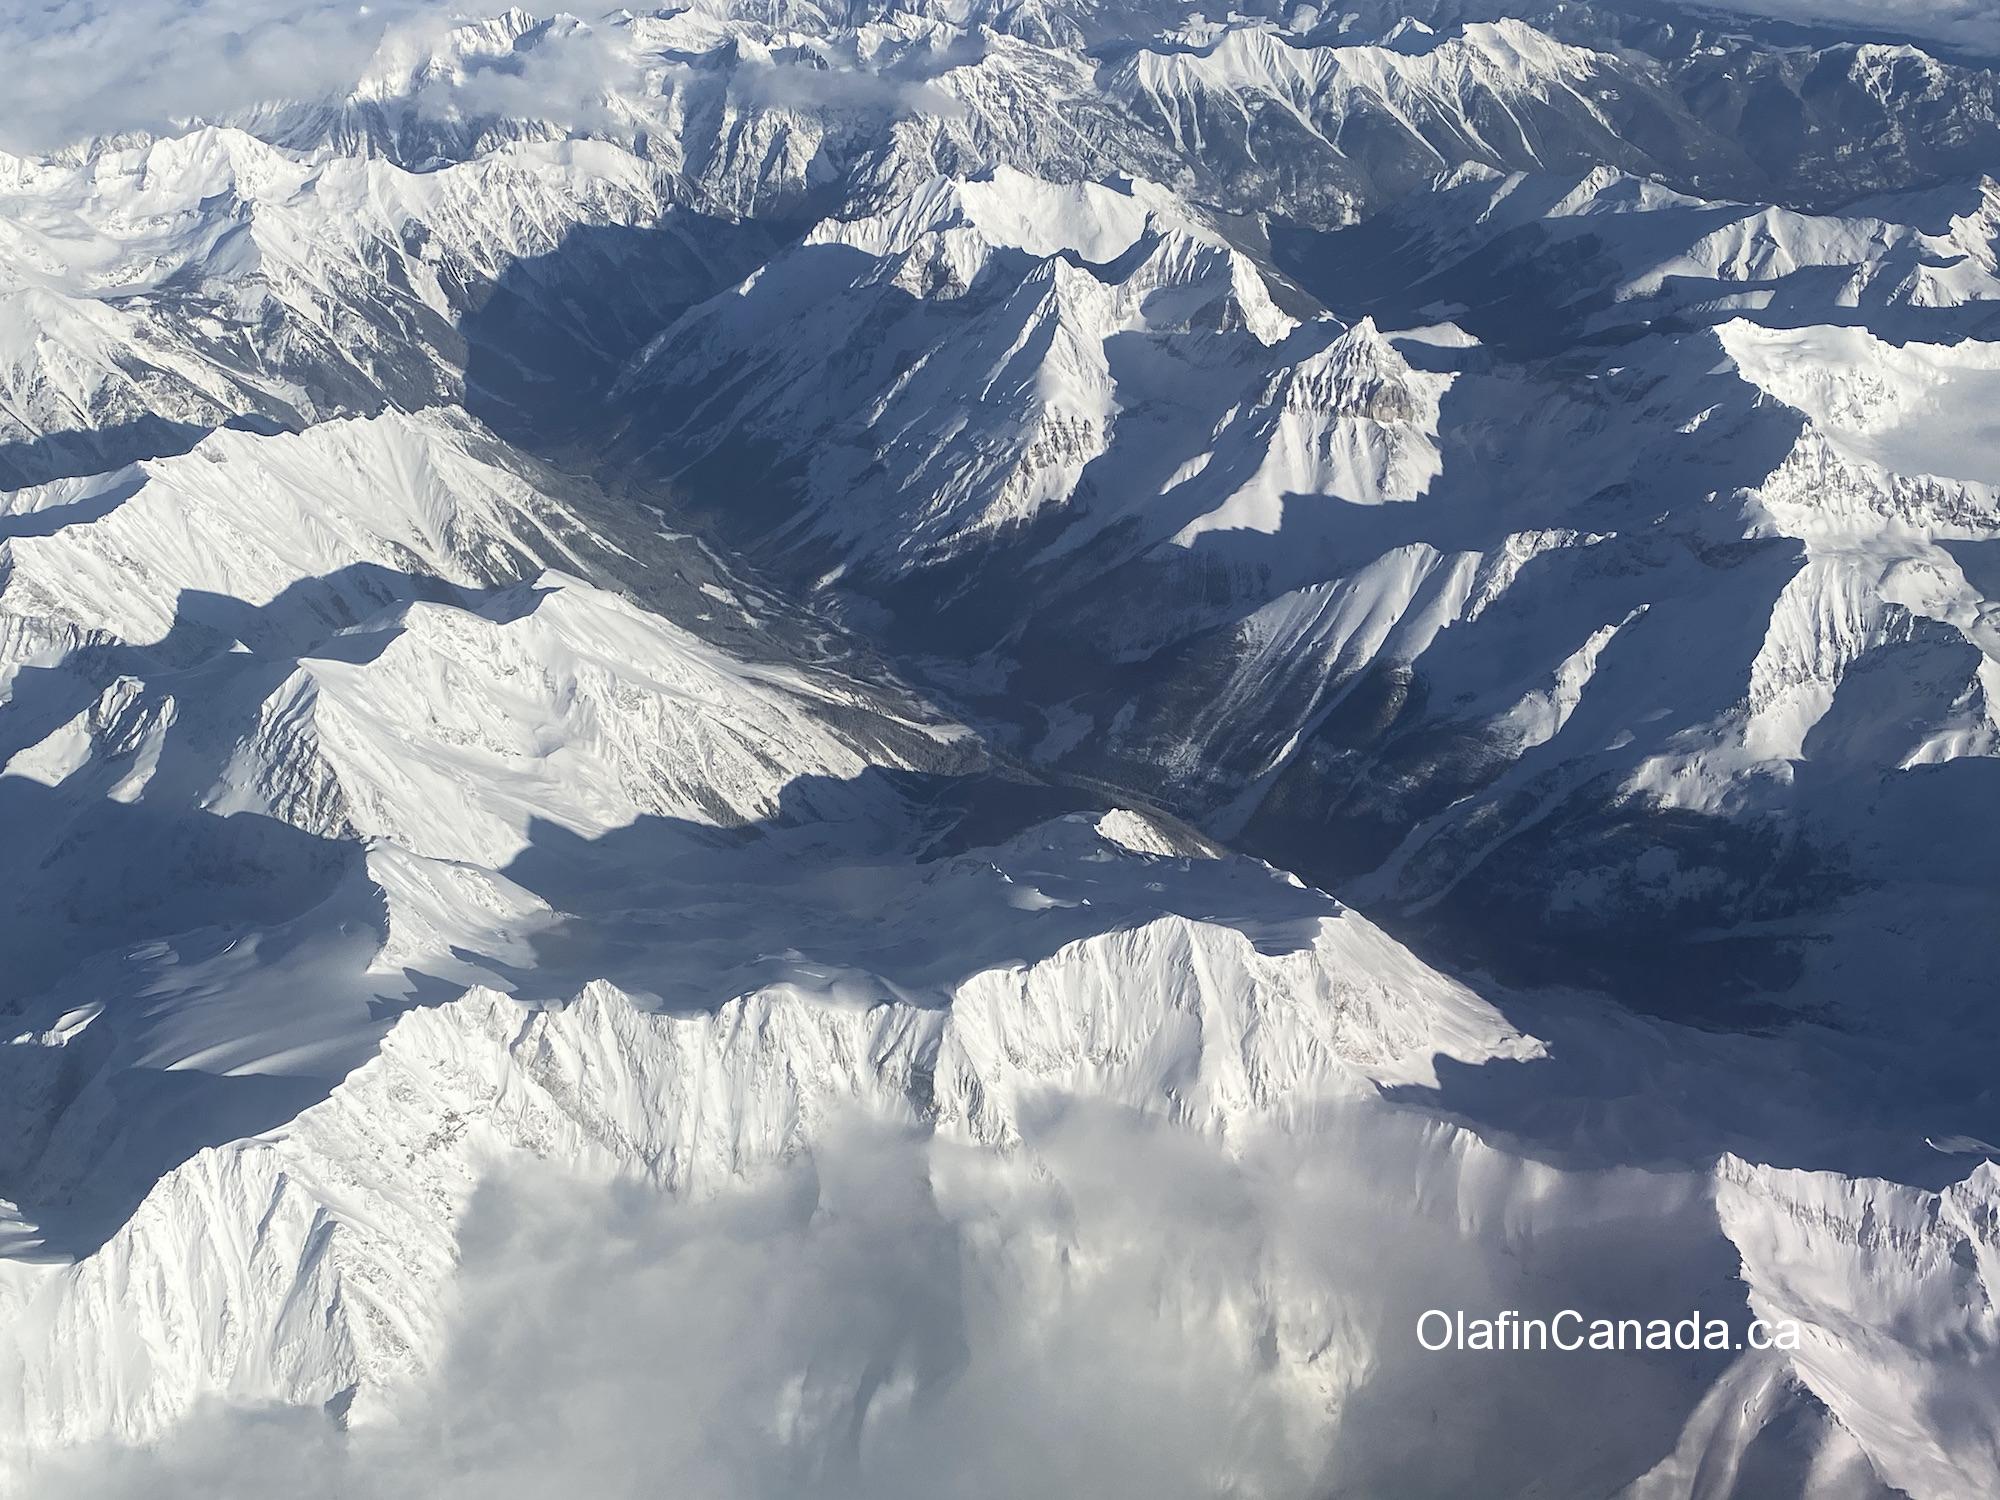 Flying over the Coastal Mountains near Vancouver #olafincanada #britishcolumbia #discoverbc #coastalmountains